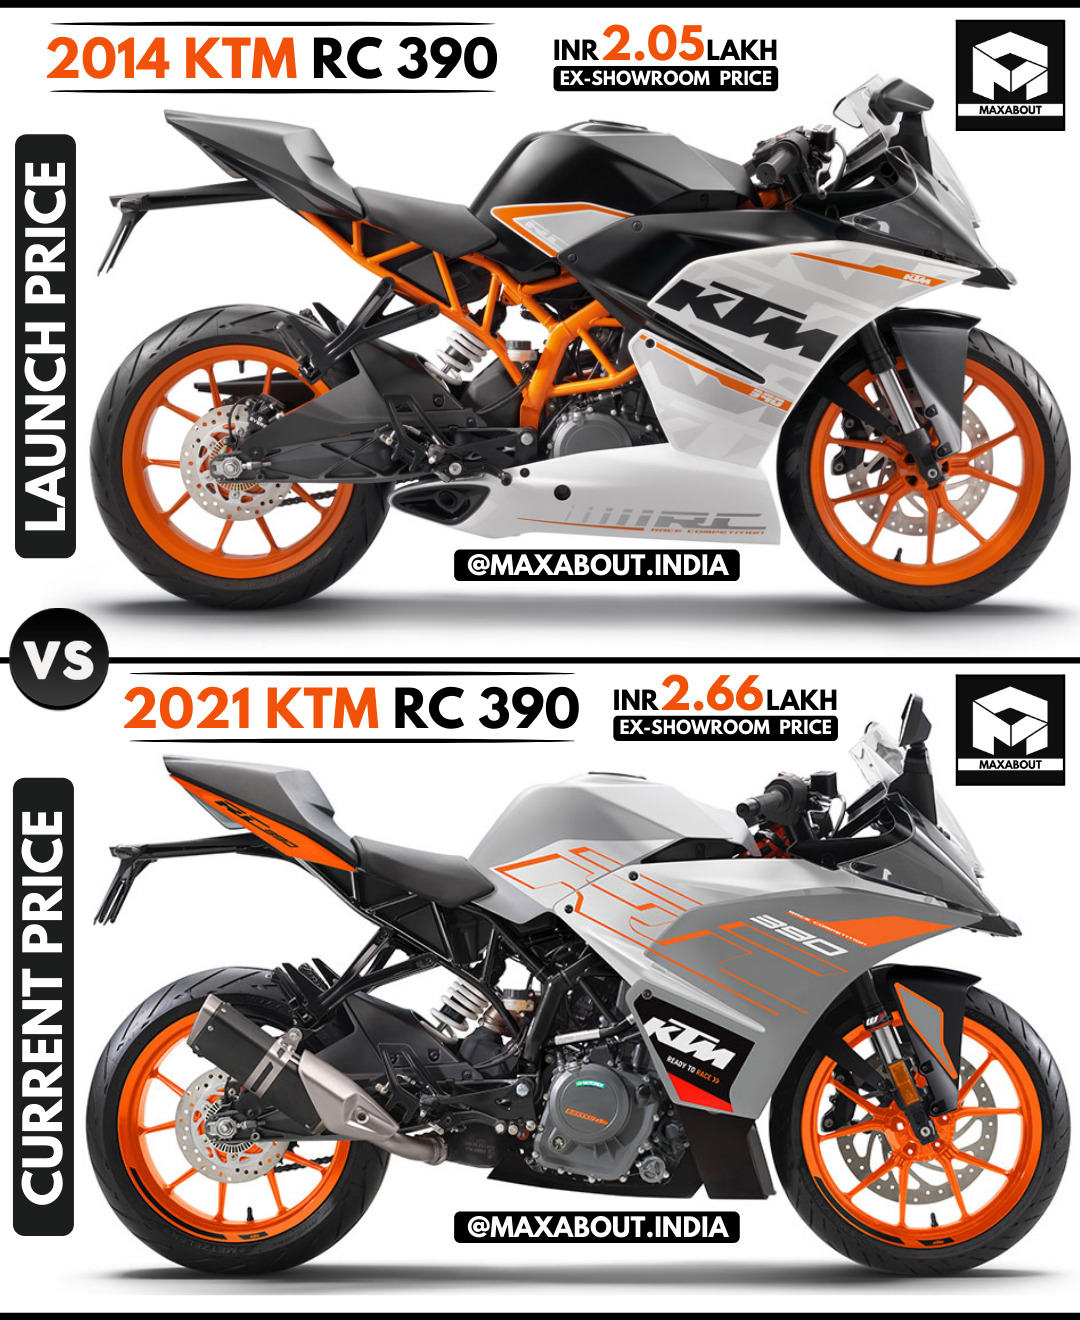 KTM RC 390: Launch Price vs Current Price